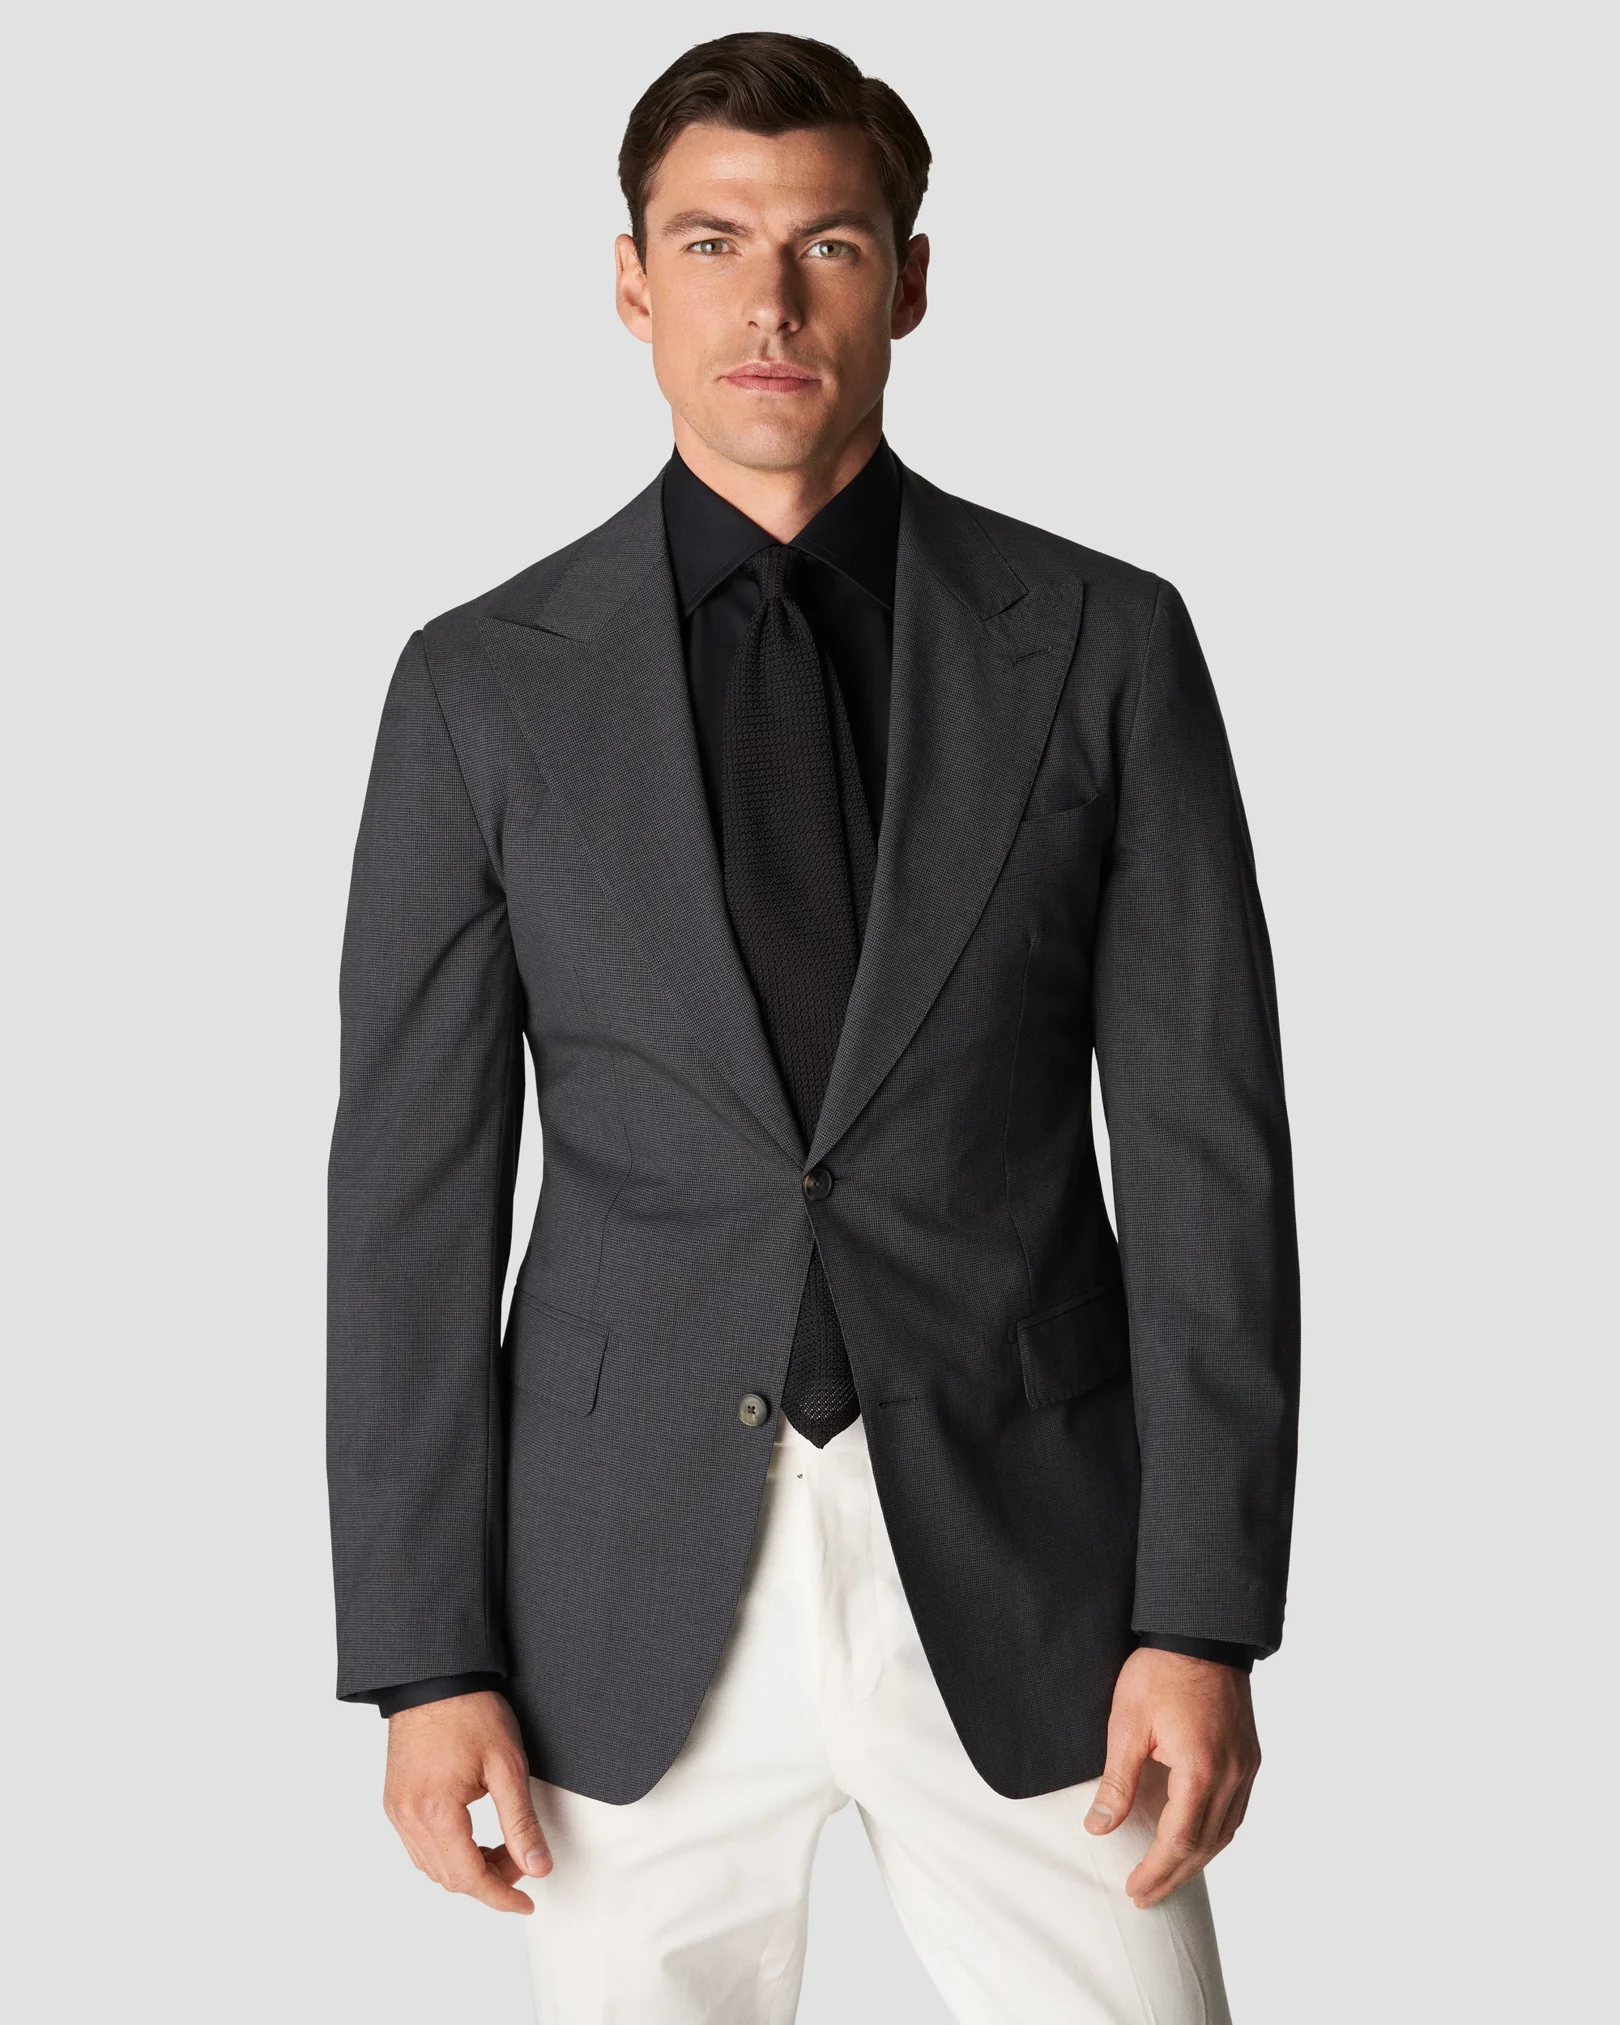 Eton - black twill stretch shirt